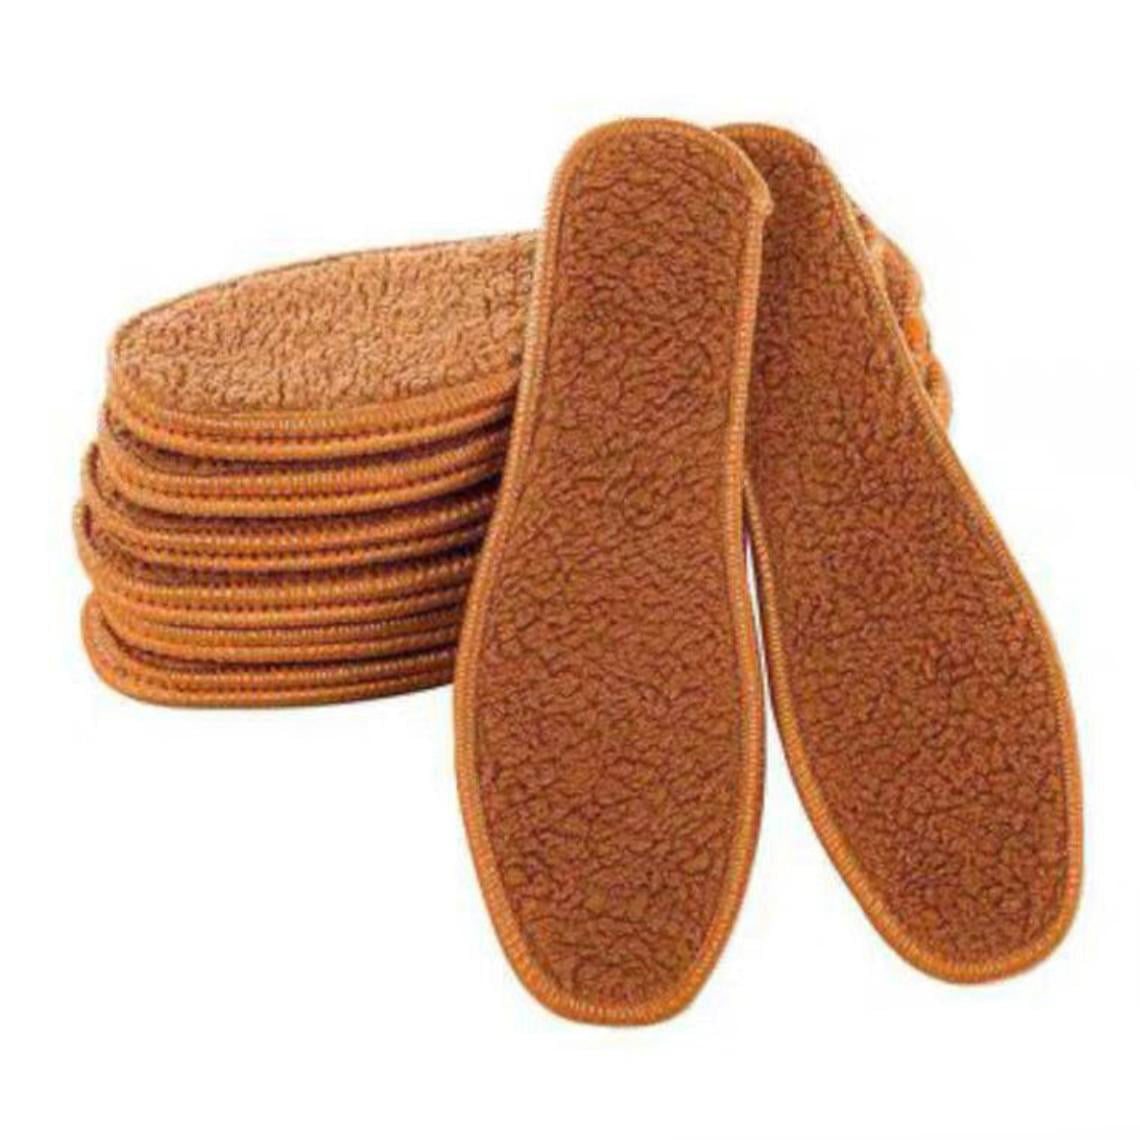 New Winter Boot Shoe Warm wool Fleece Thermal Insoles for Men Women 1 pair ca 